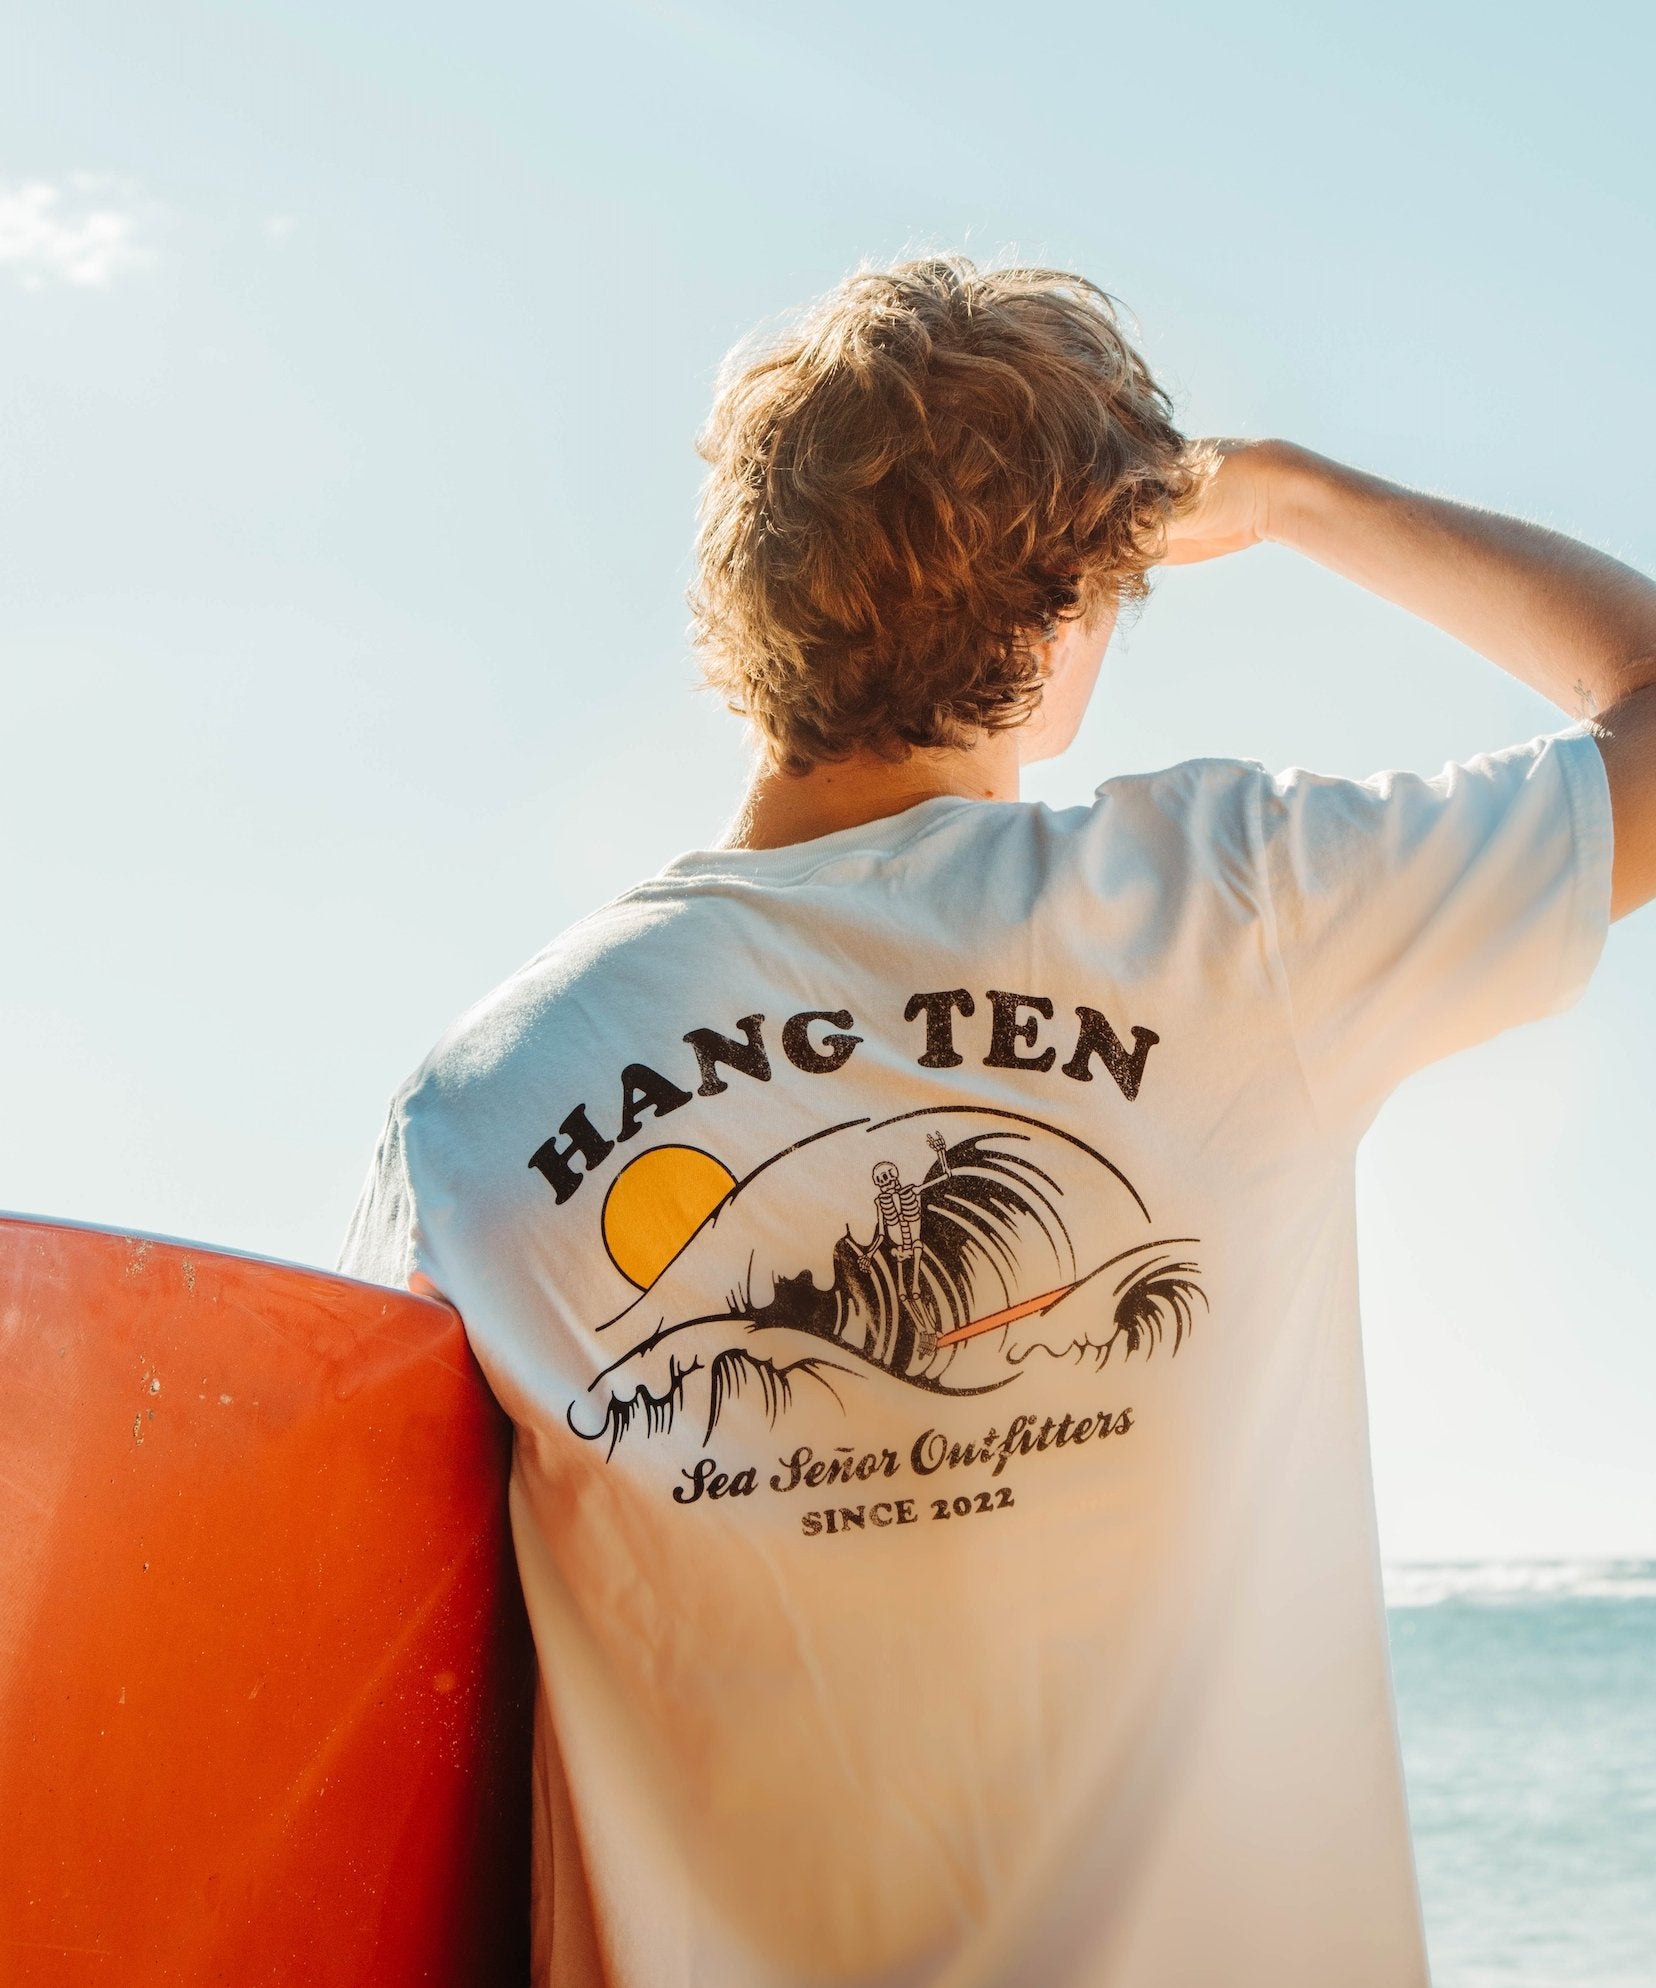 Hang Ten - Pocket - Sea Señor Outfitters